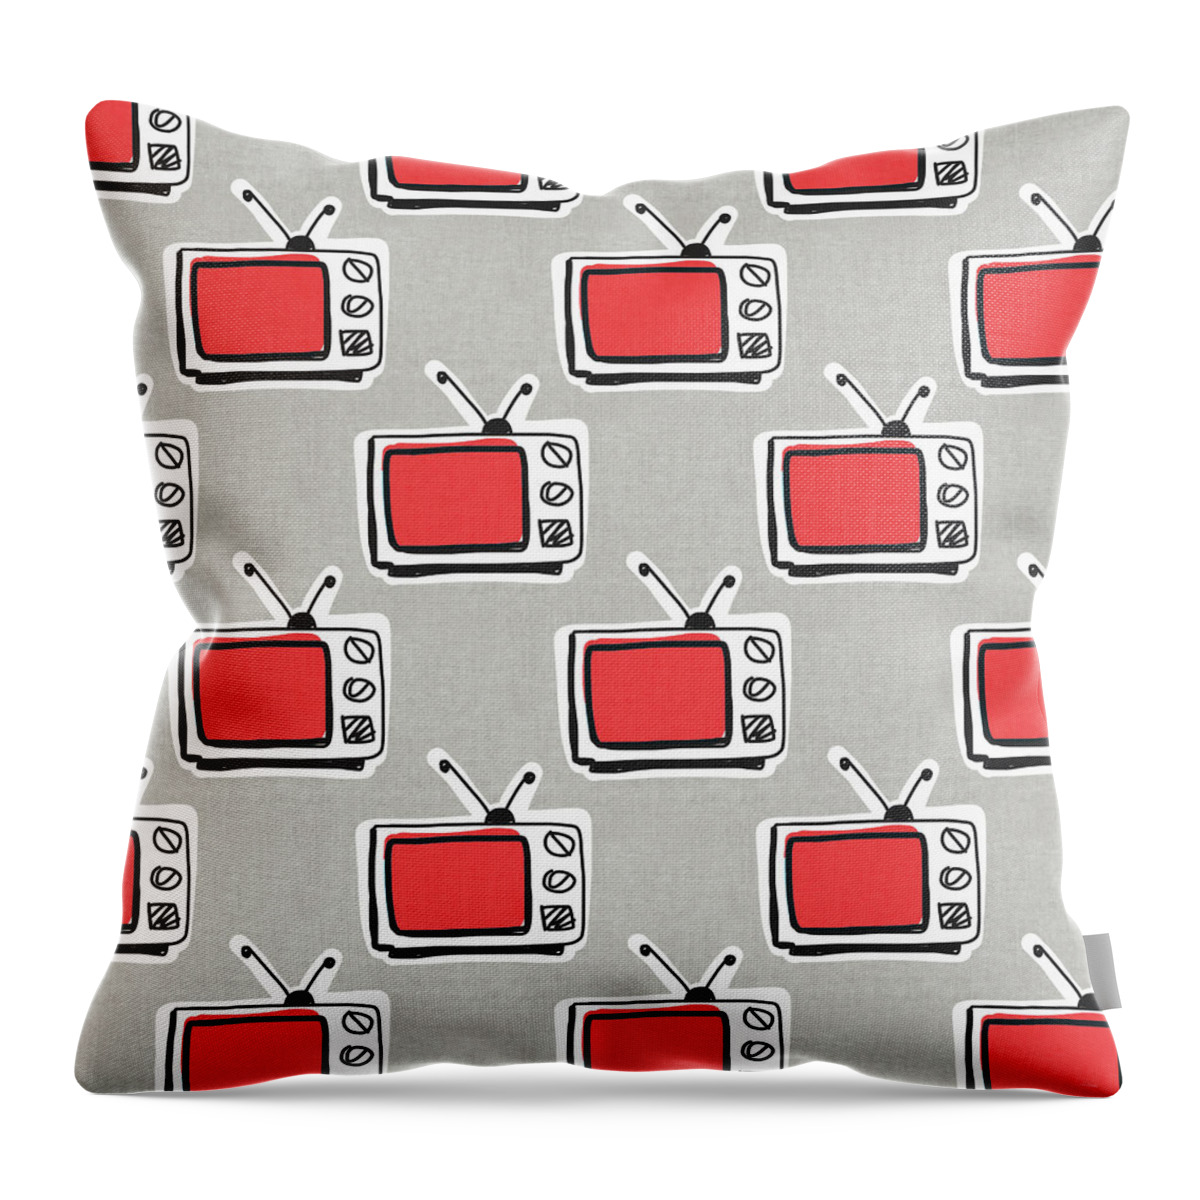 Tv Throw Pillow featuring the digital art Binge Watching- Art by Linda Woods by Linda Woods